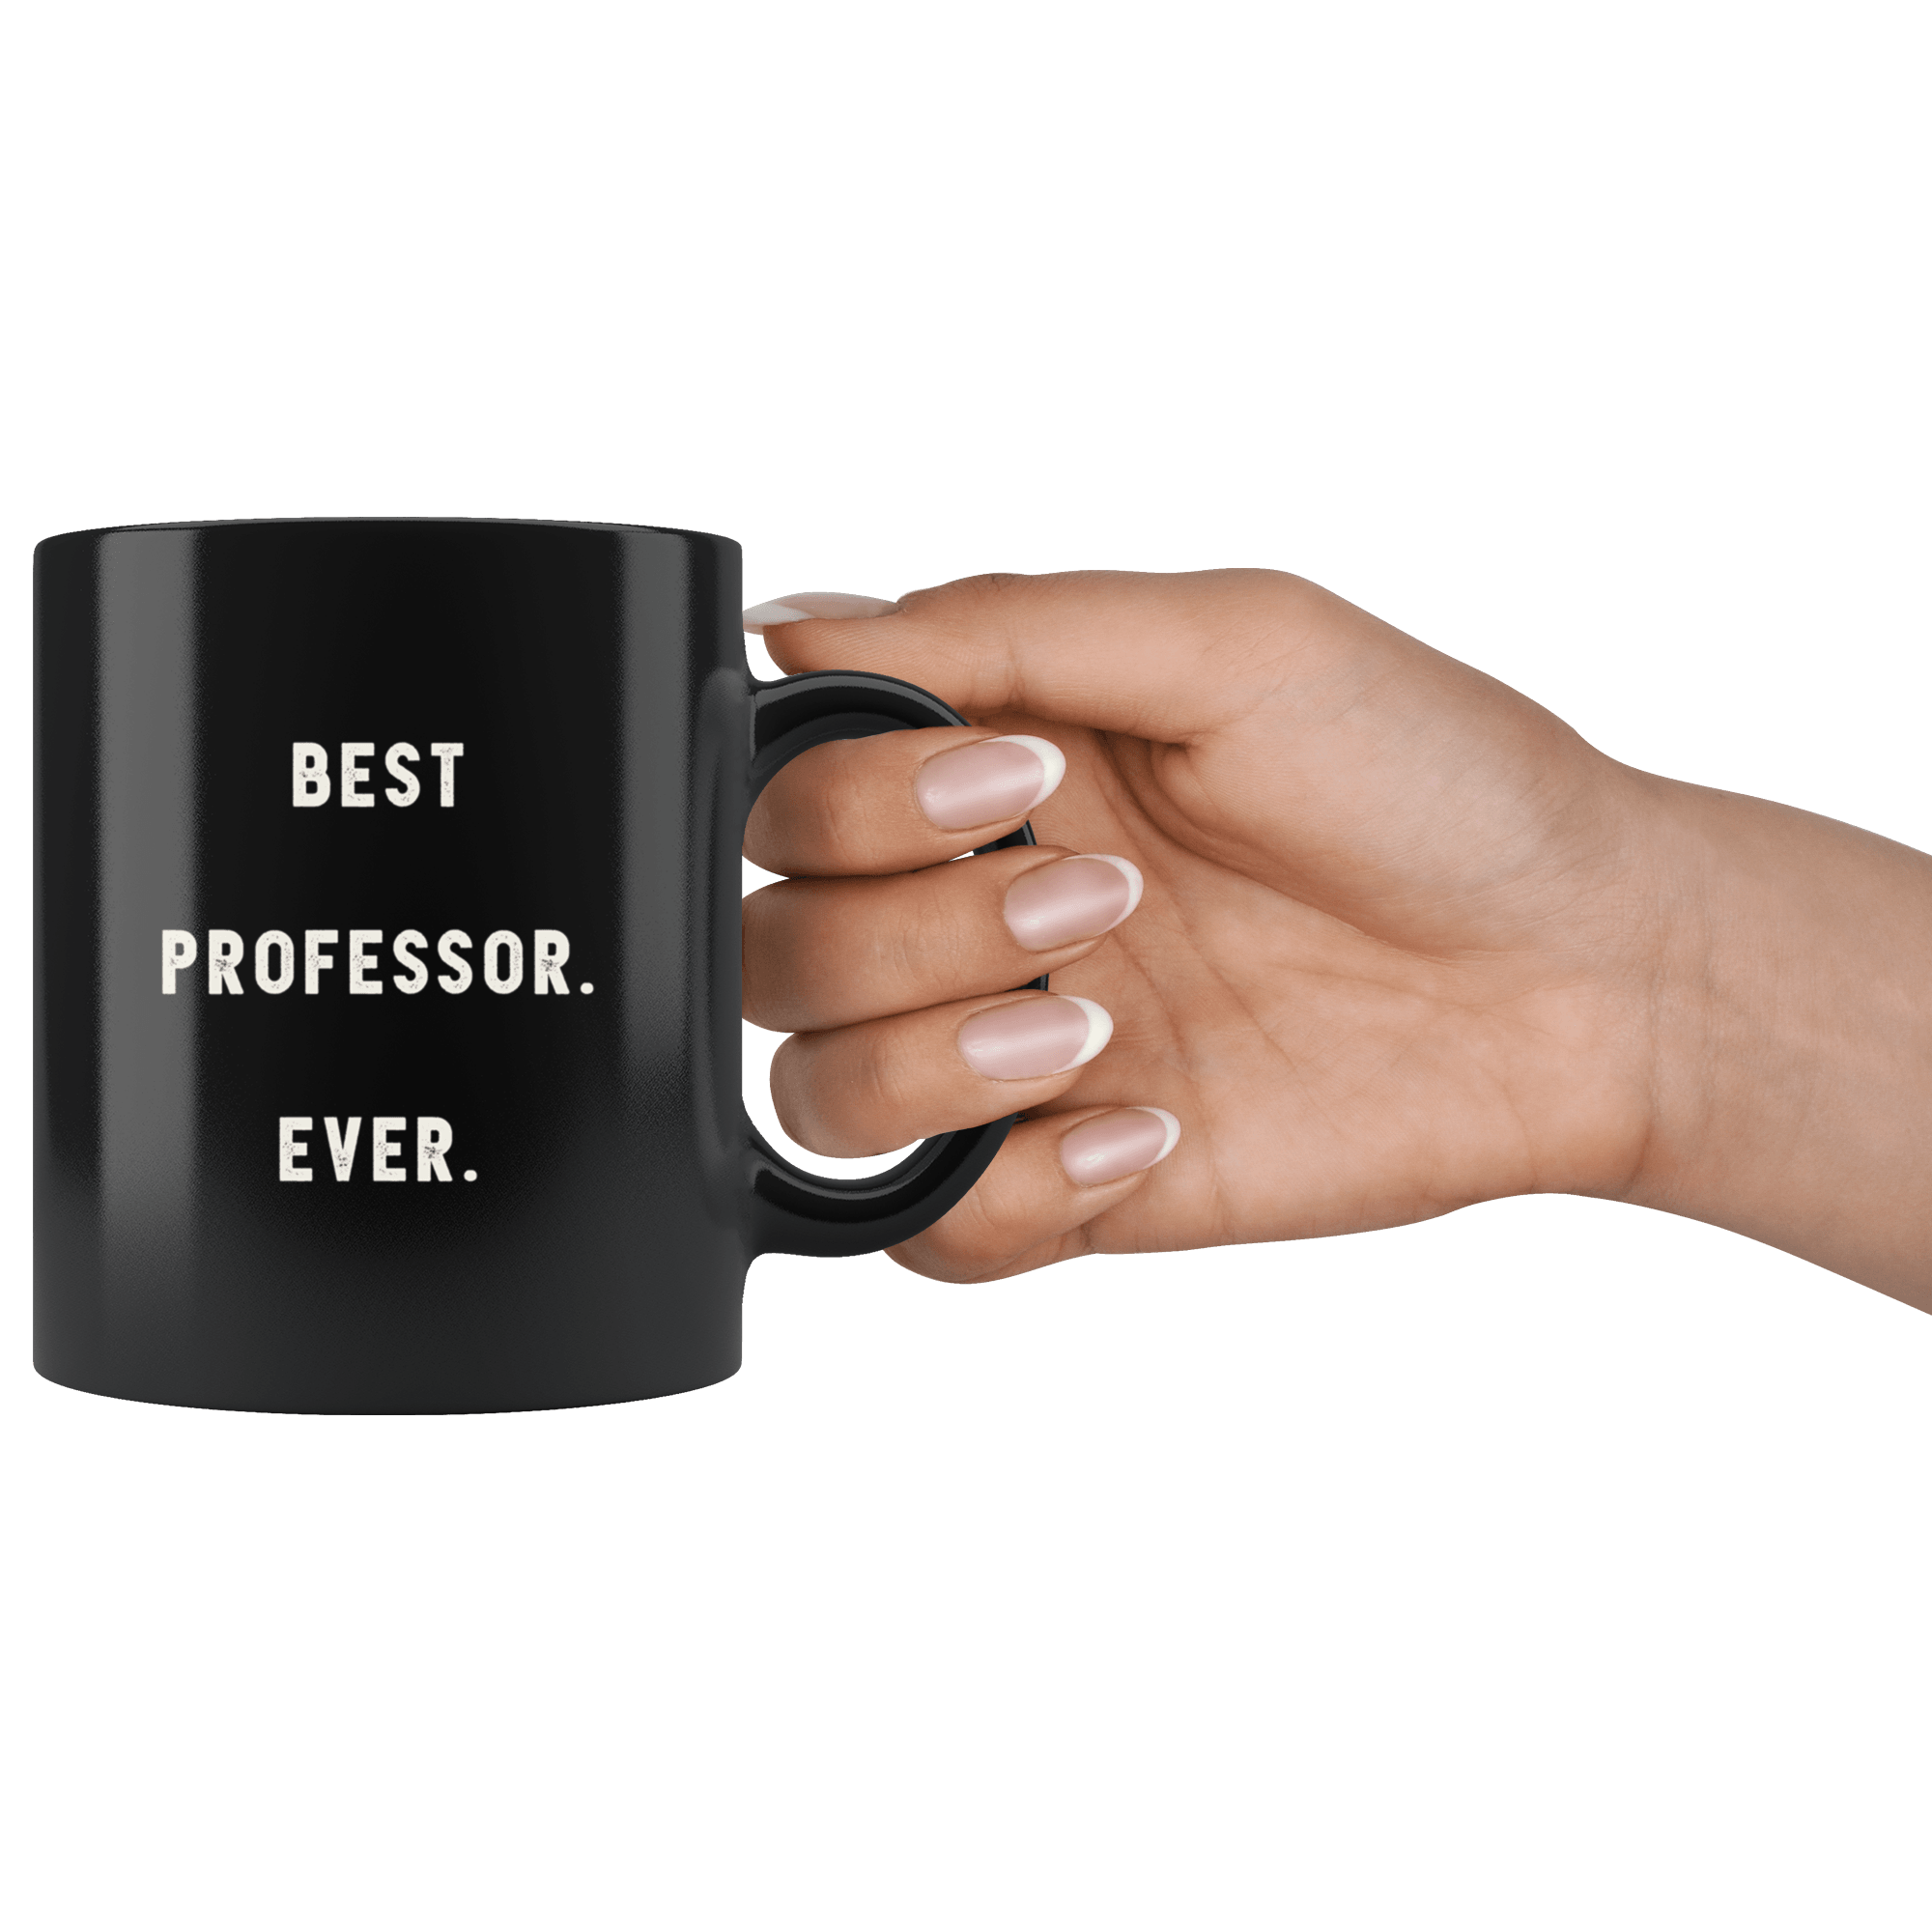 Is this a good gift for a nursing professor? : r/nursing